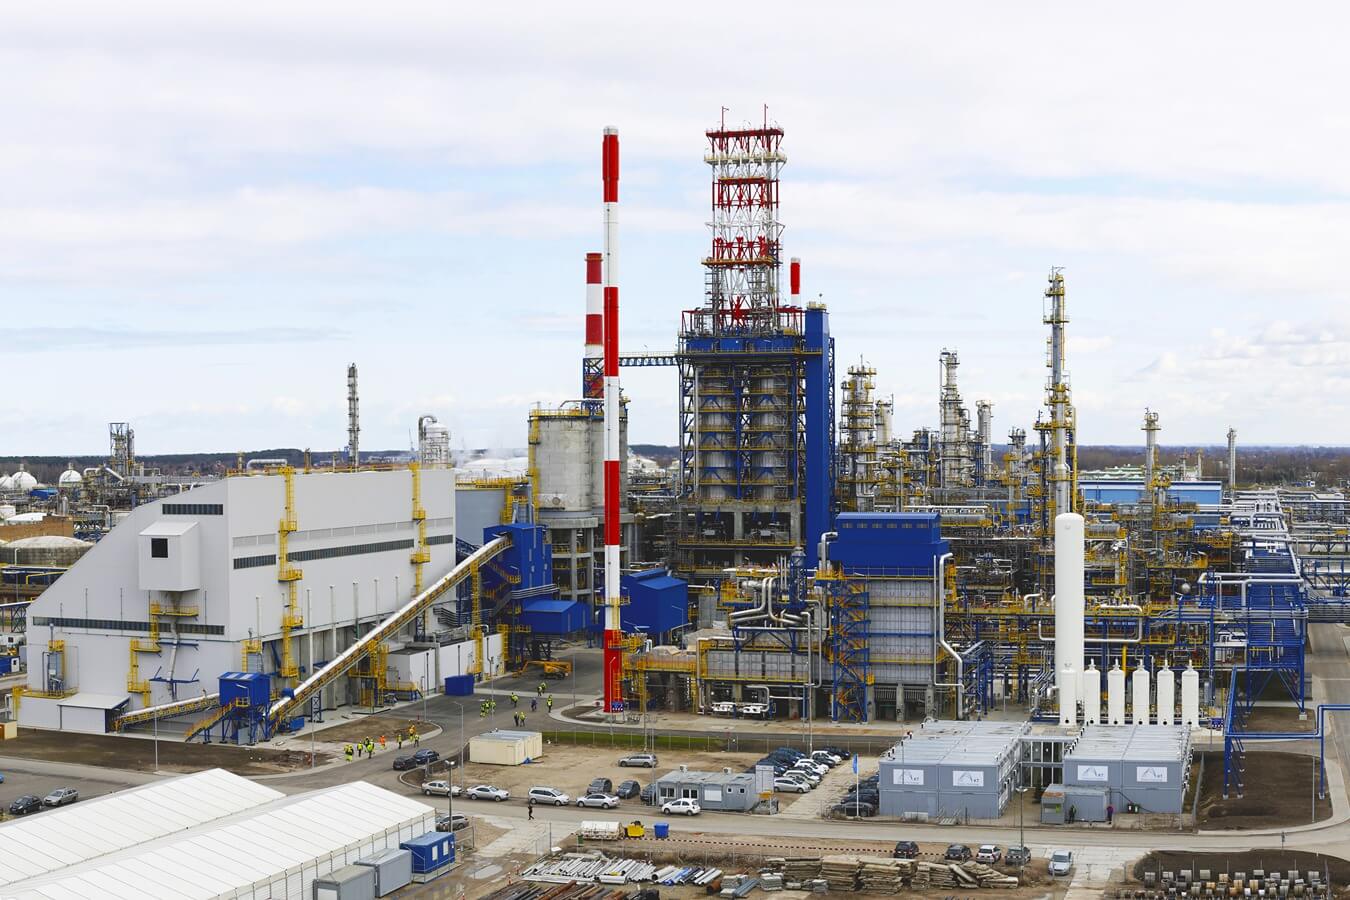 Refinery Process Units - Poland